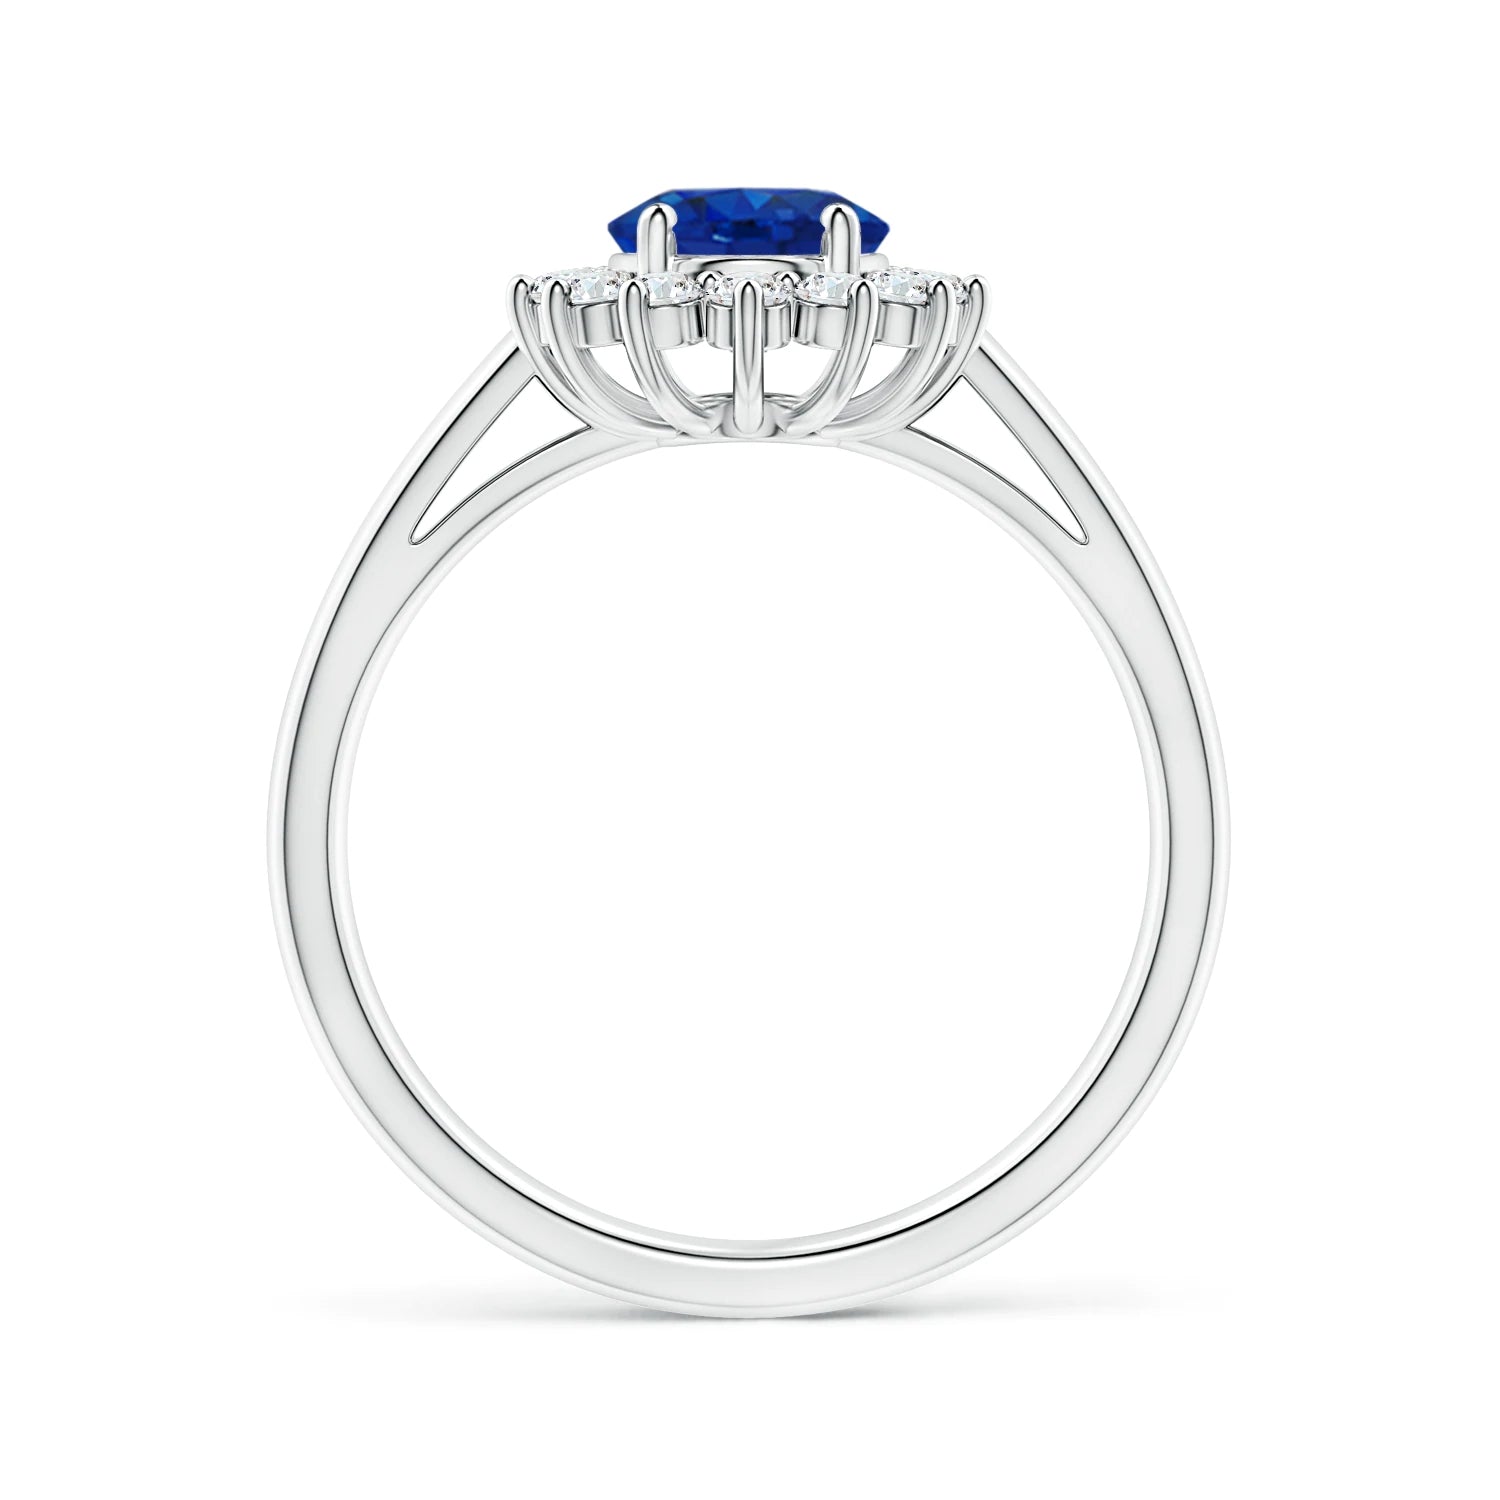 2 CT. Oval Sapphire Ring with Sunburst Diamond Halo